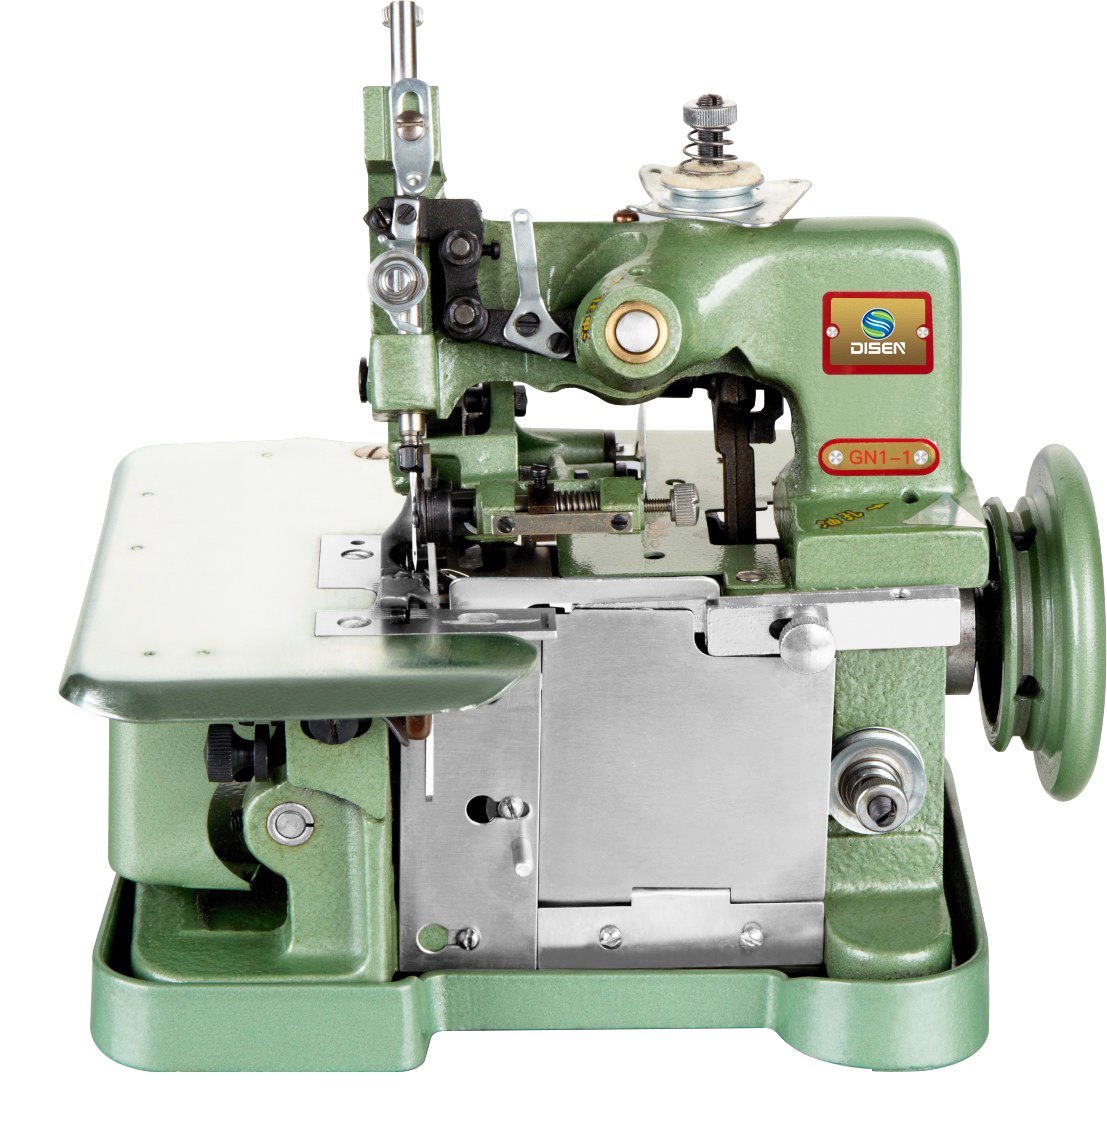 GN1-1D Medium Speed Industrial Overlock Sewing Machine